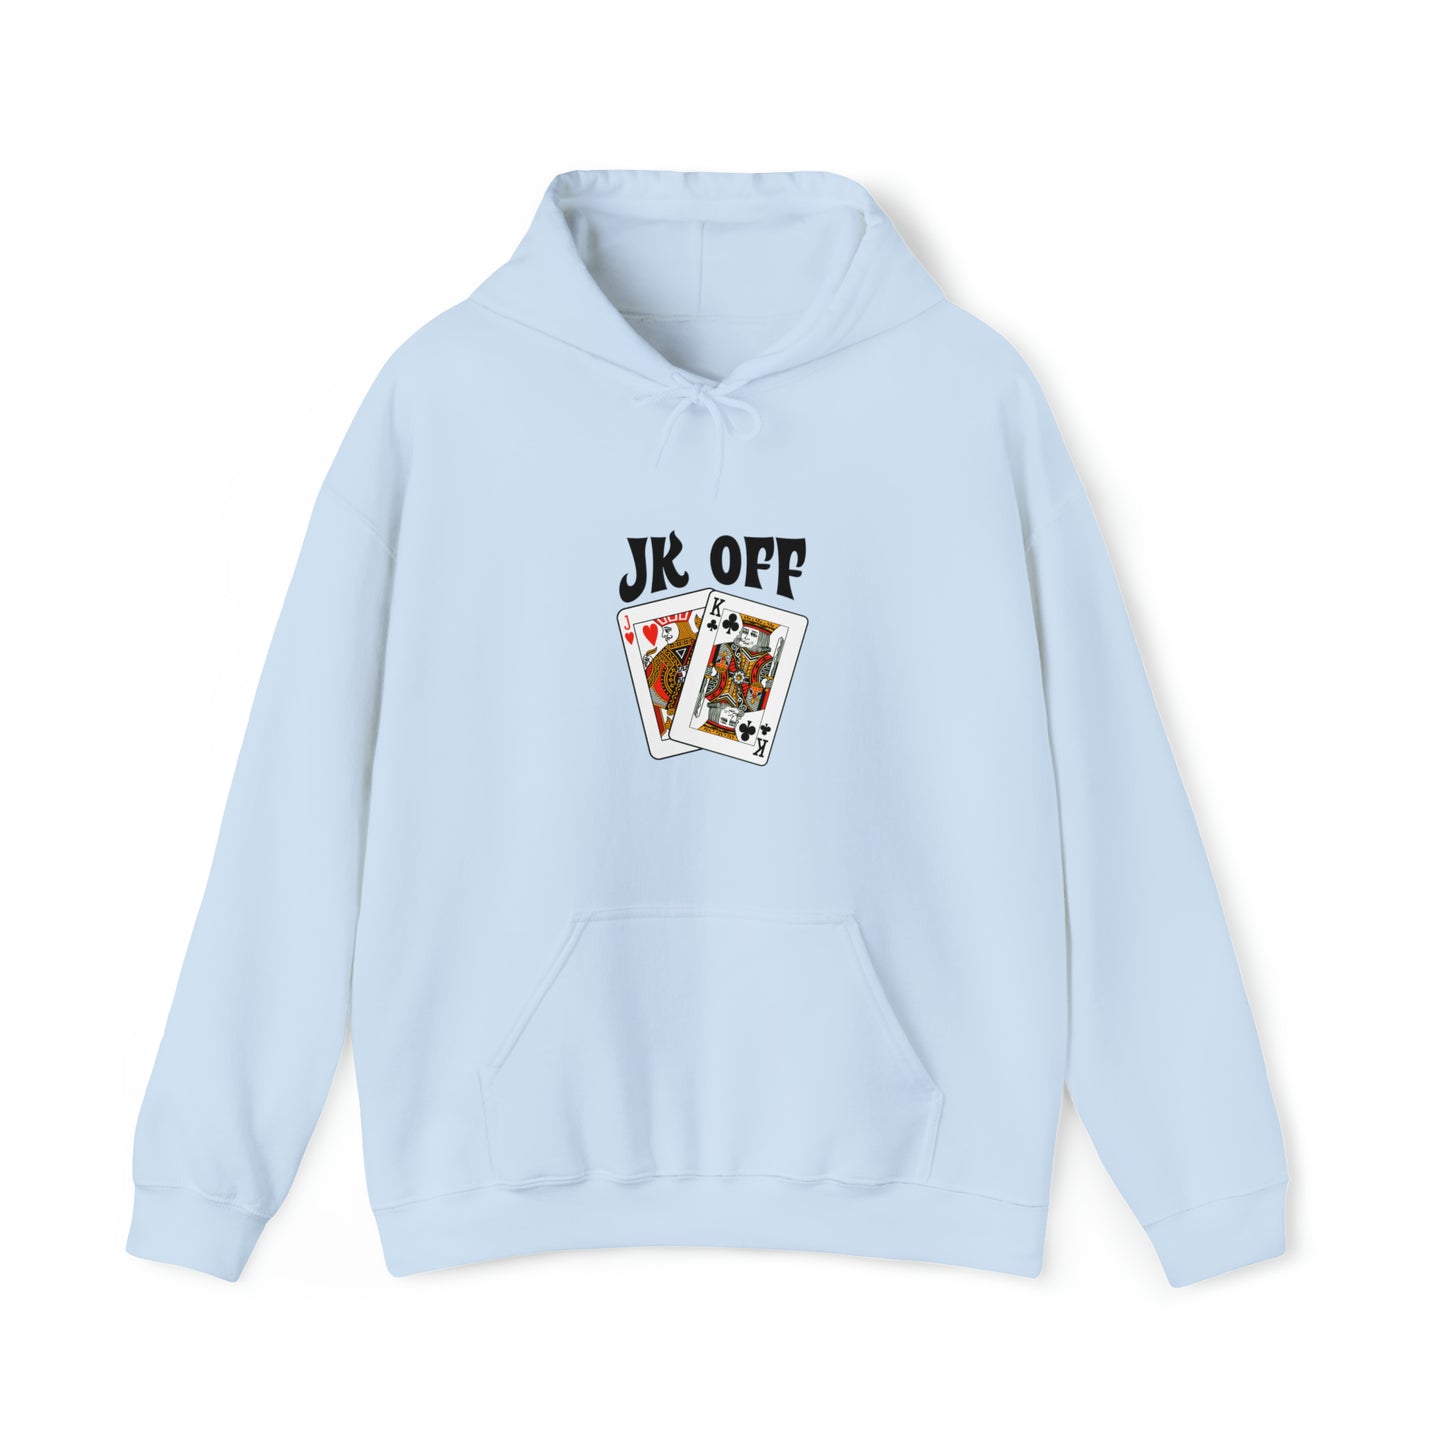 Custom Parody Hooded Sweatshirt, JK off design